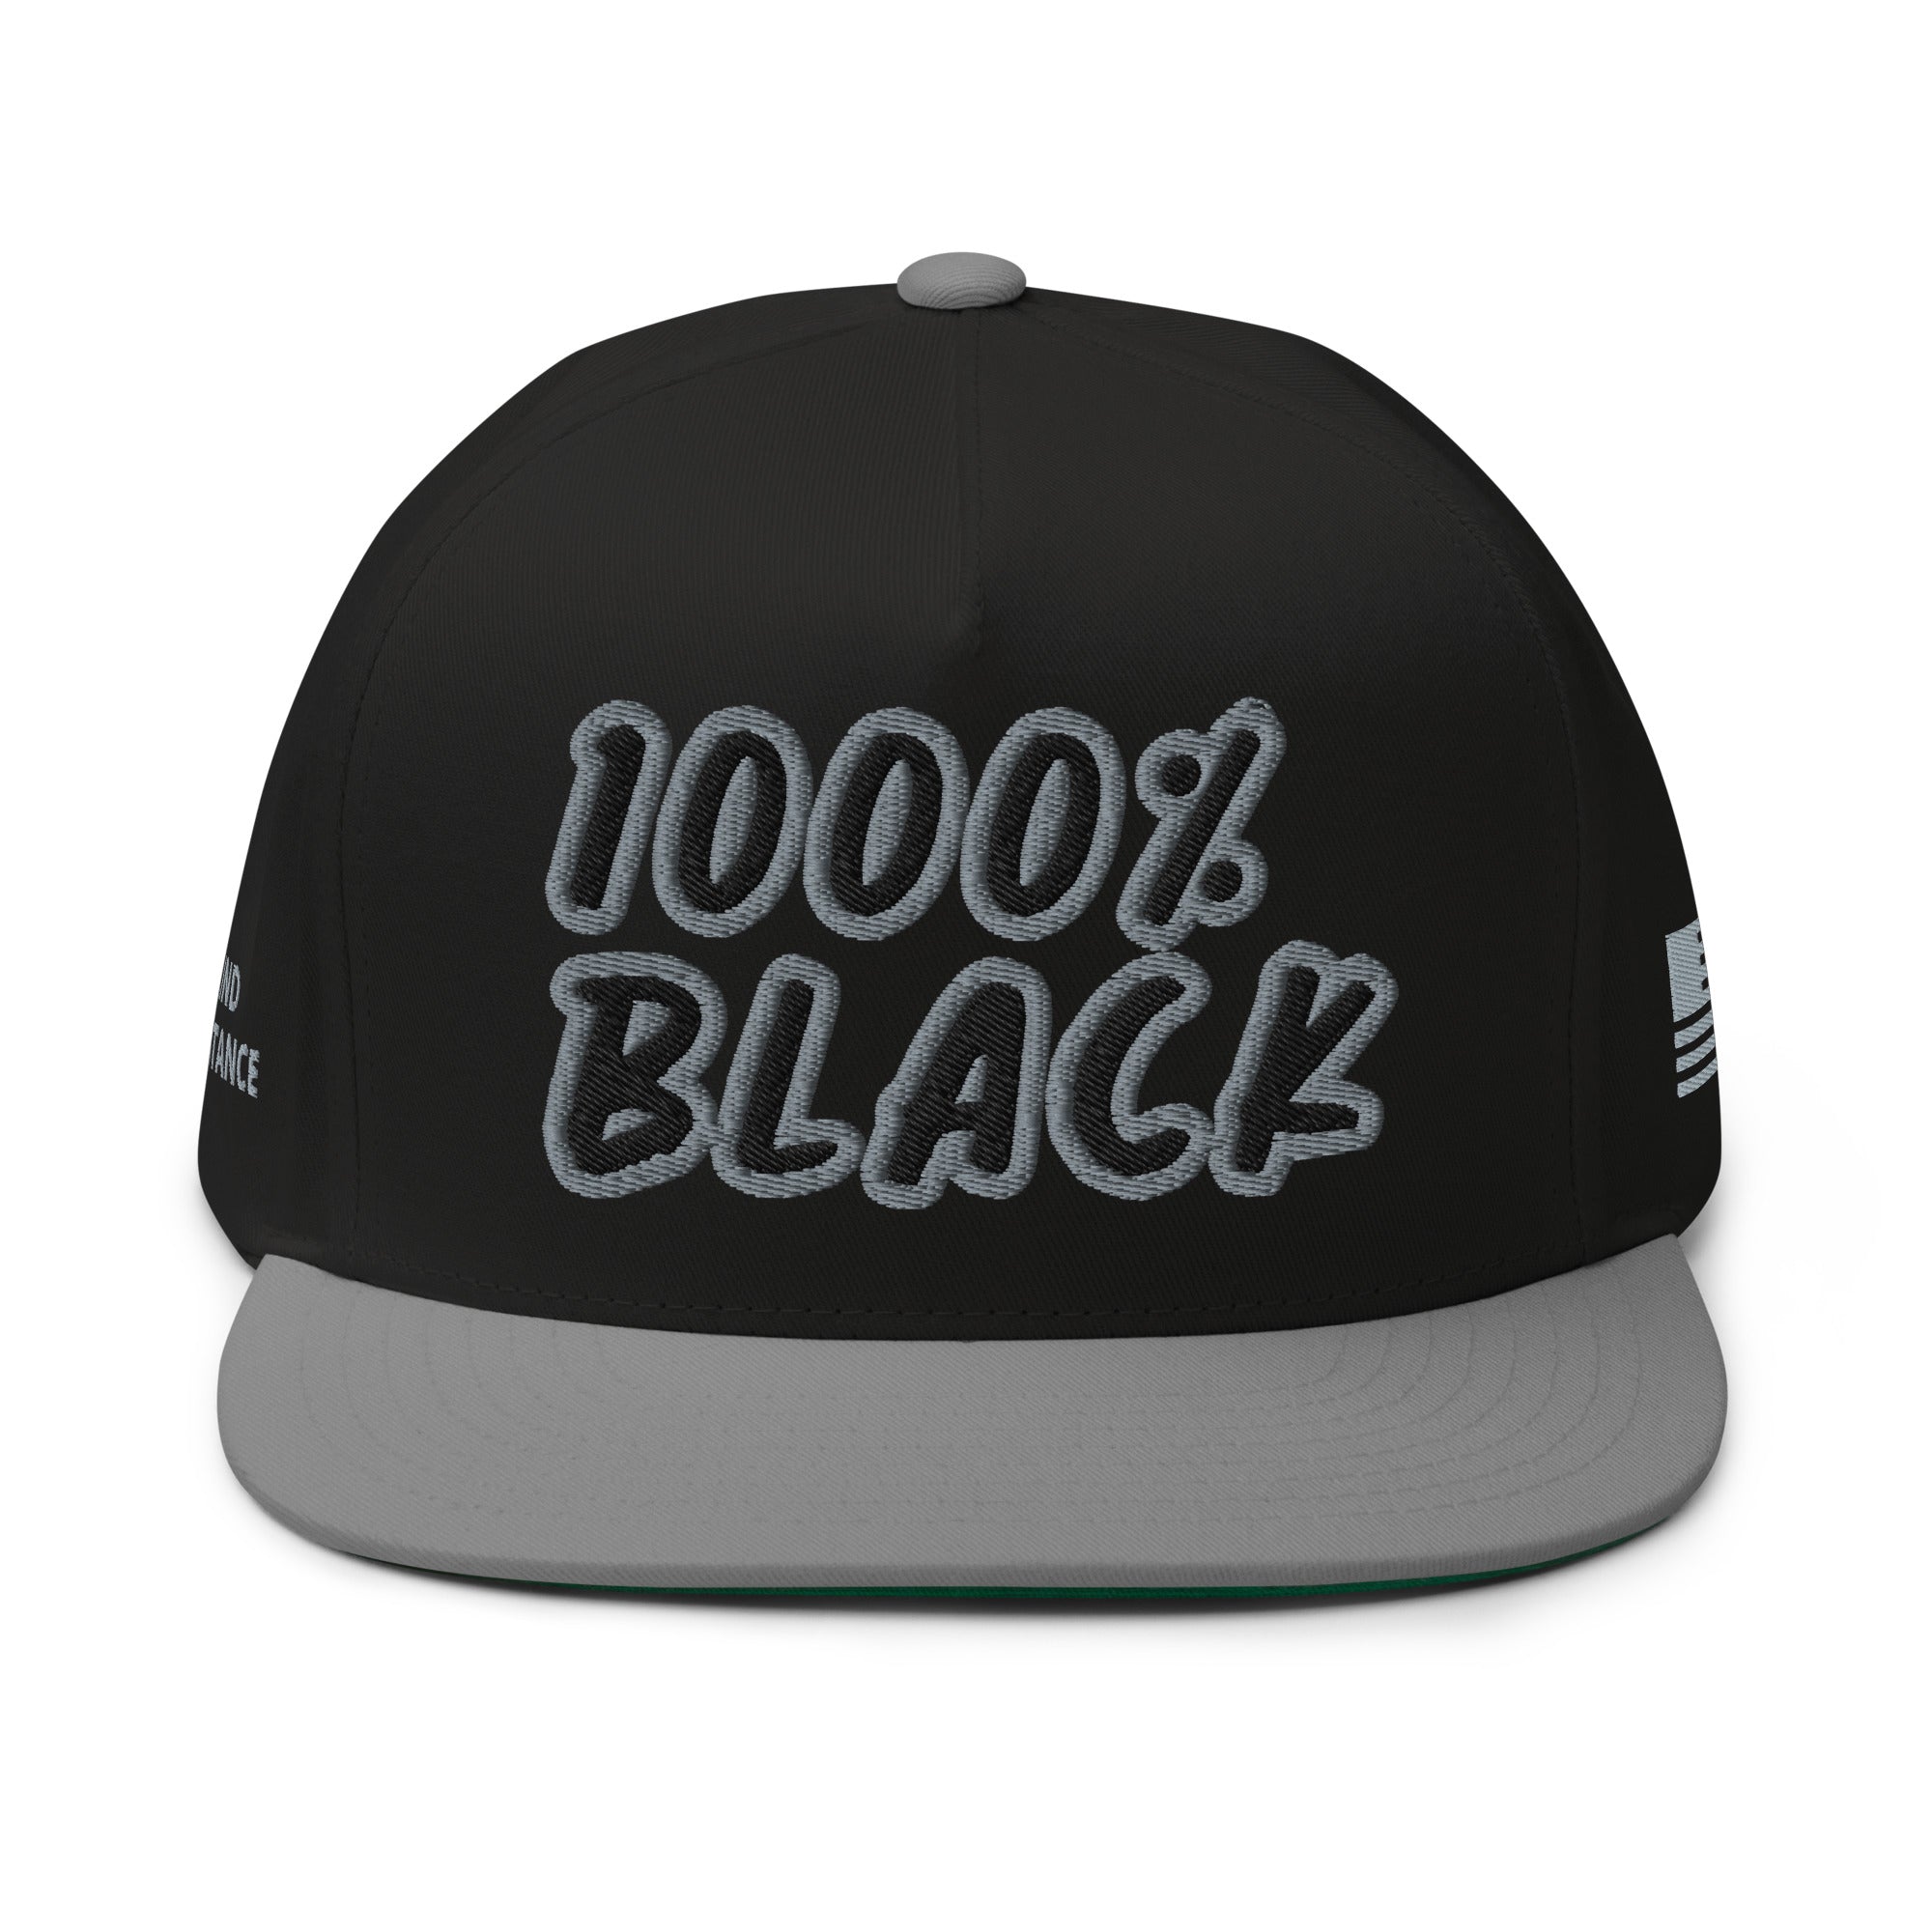 1000% BLACK (For the Culture) Flat Bill Cap